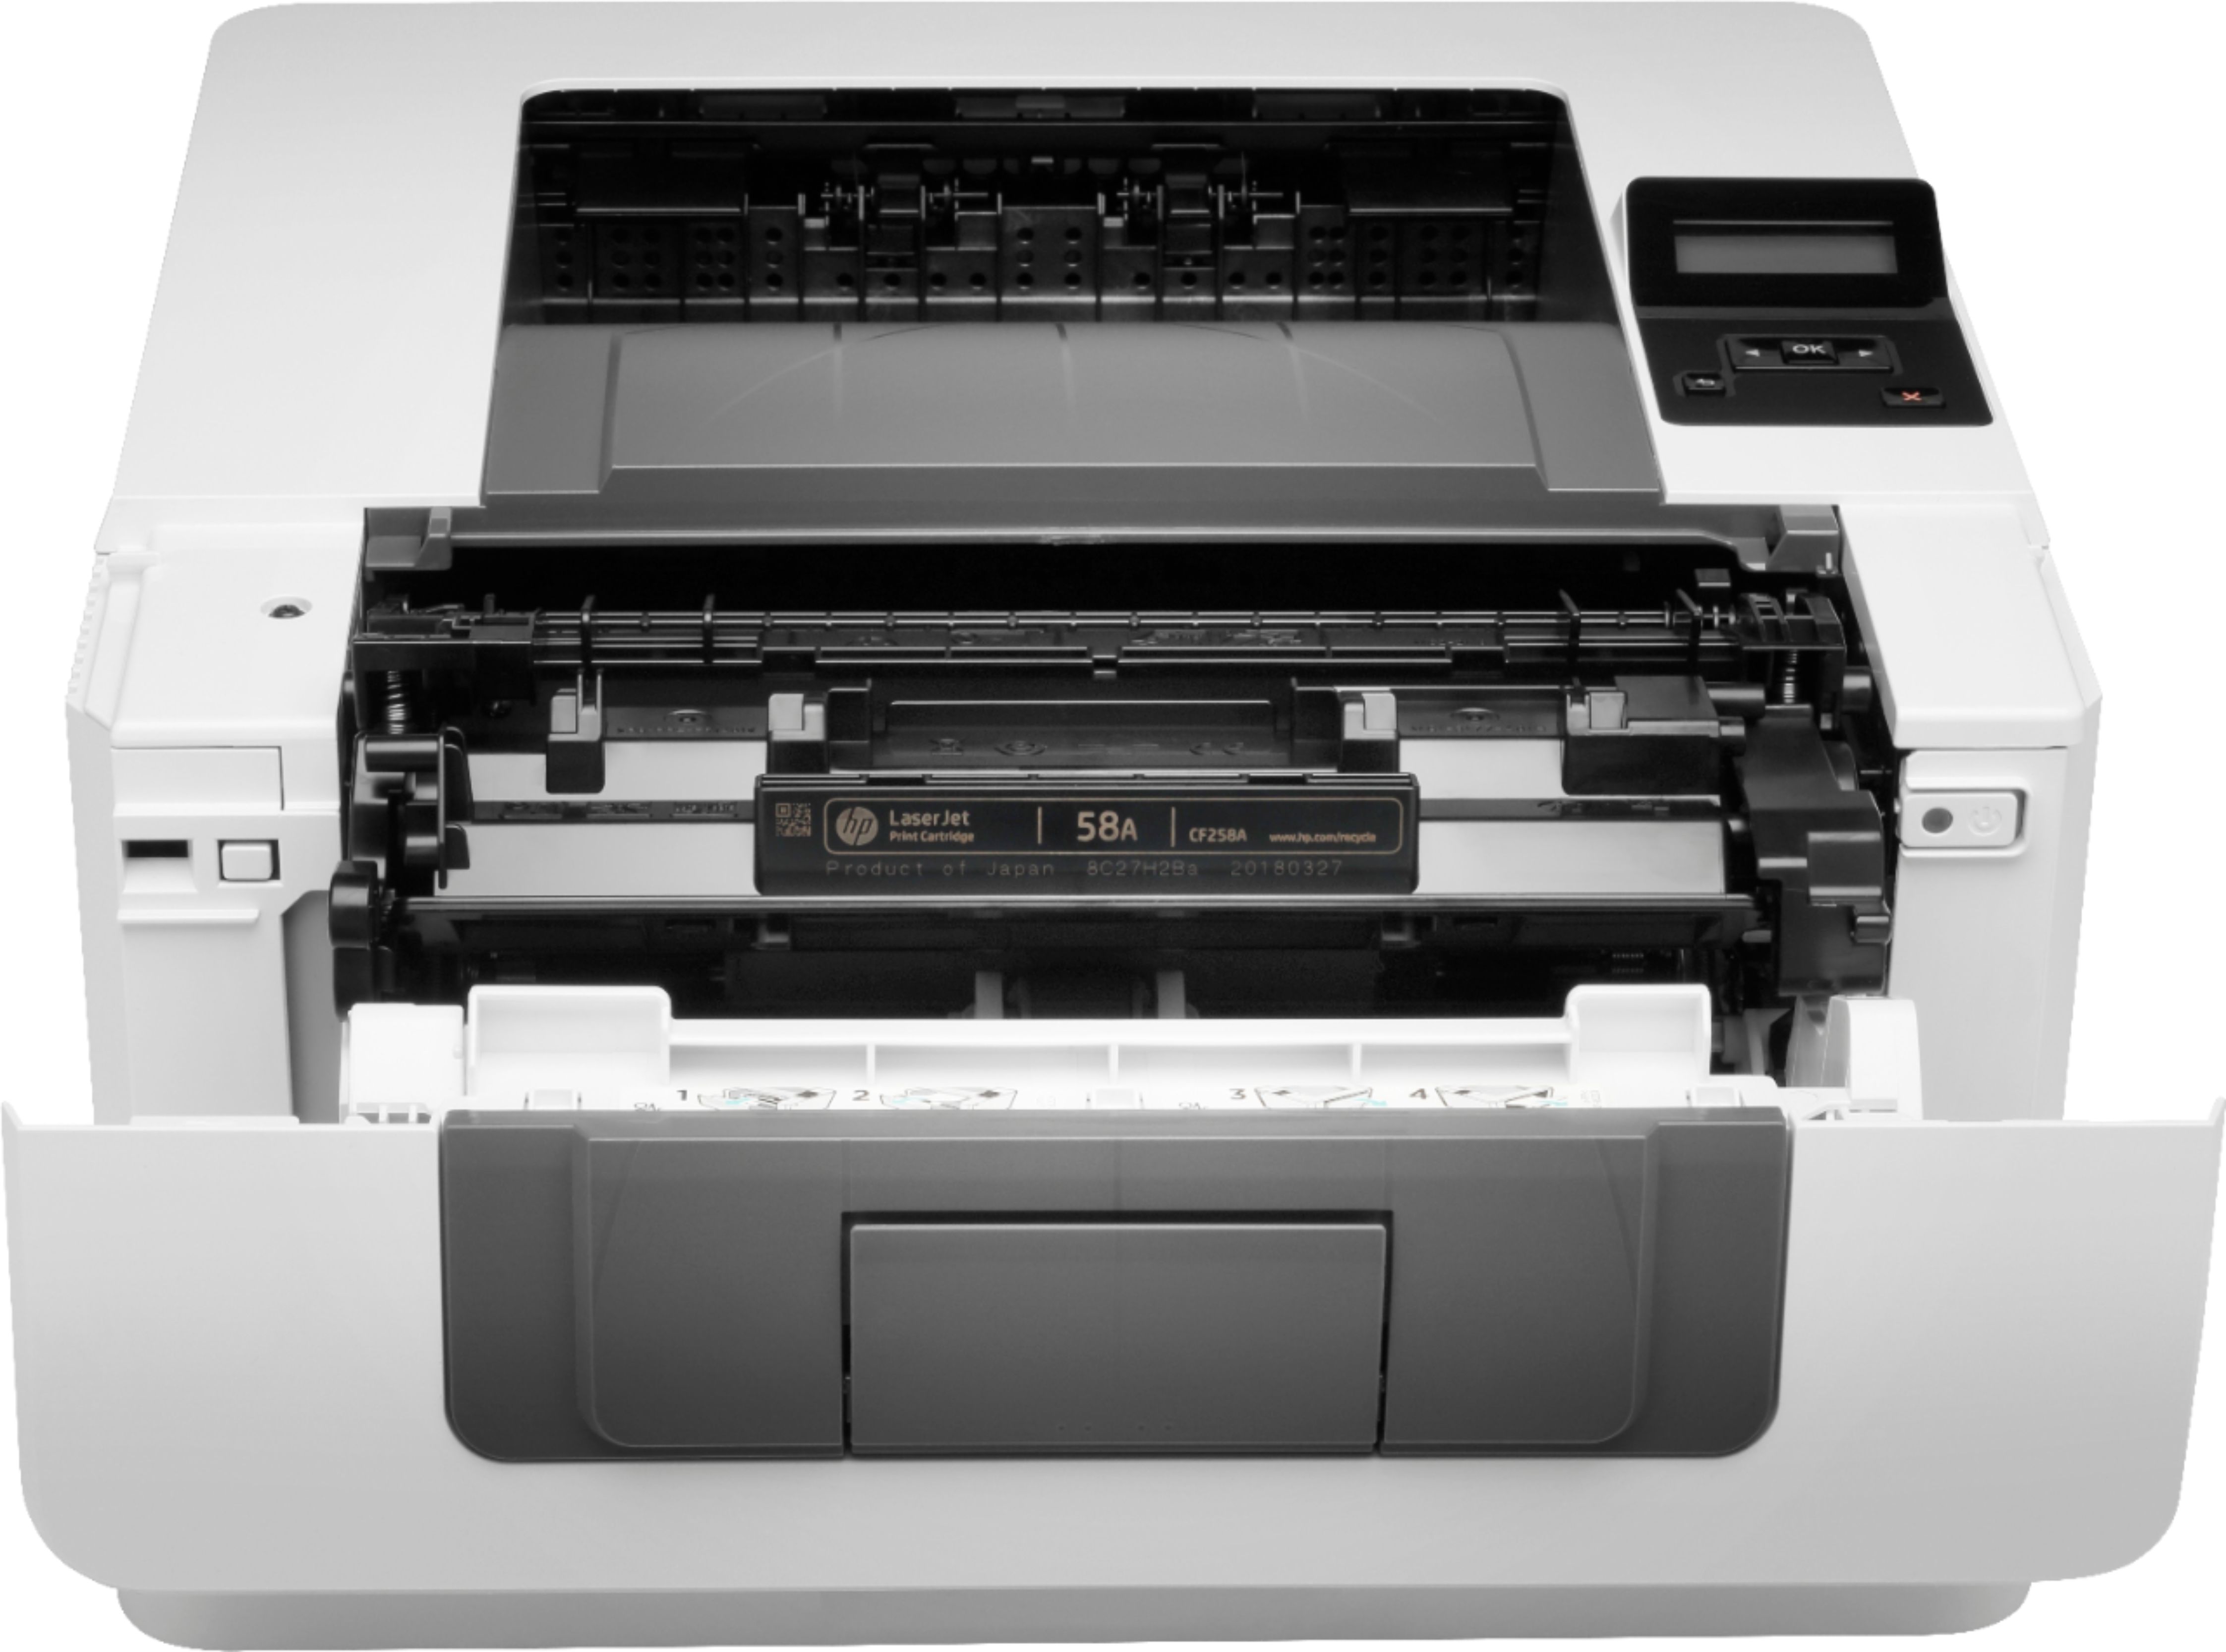 Hp Laserjet Pro M404n Black And White Laser Printer White W1a52a Bgj Best Buy